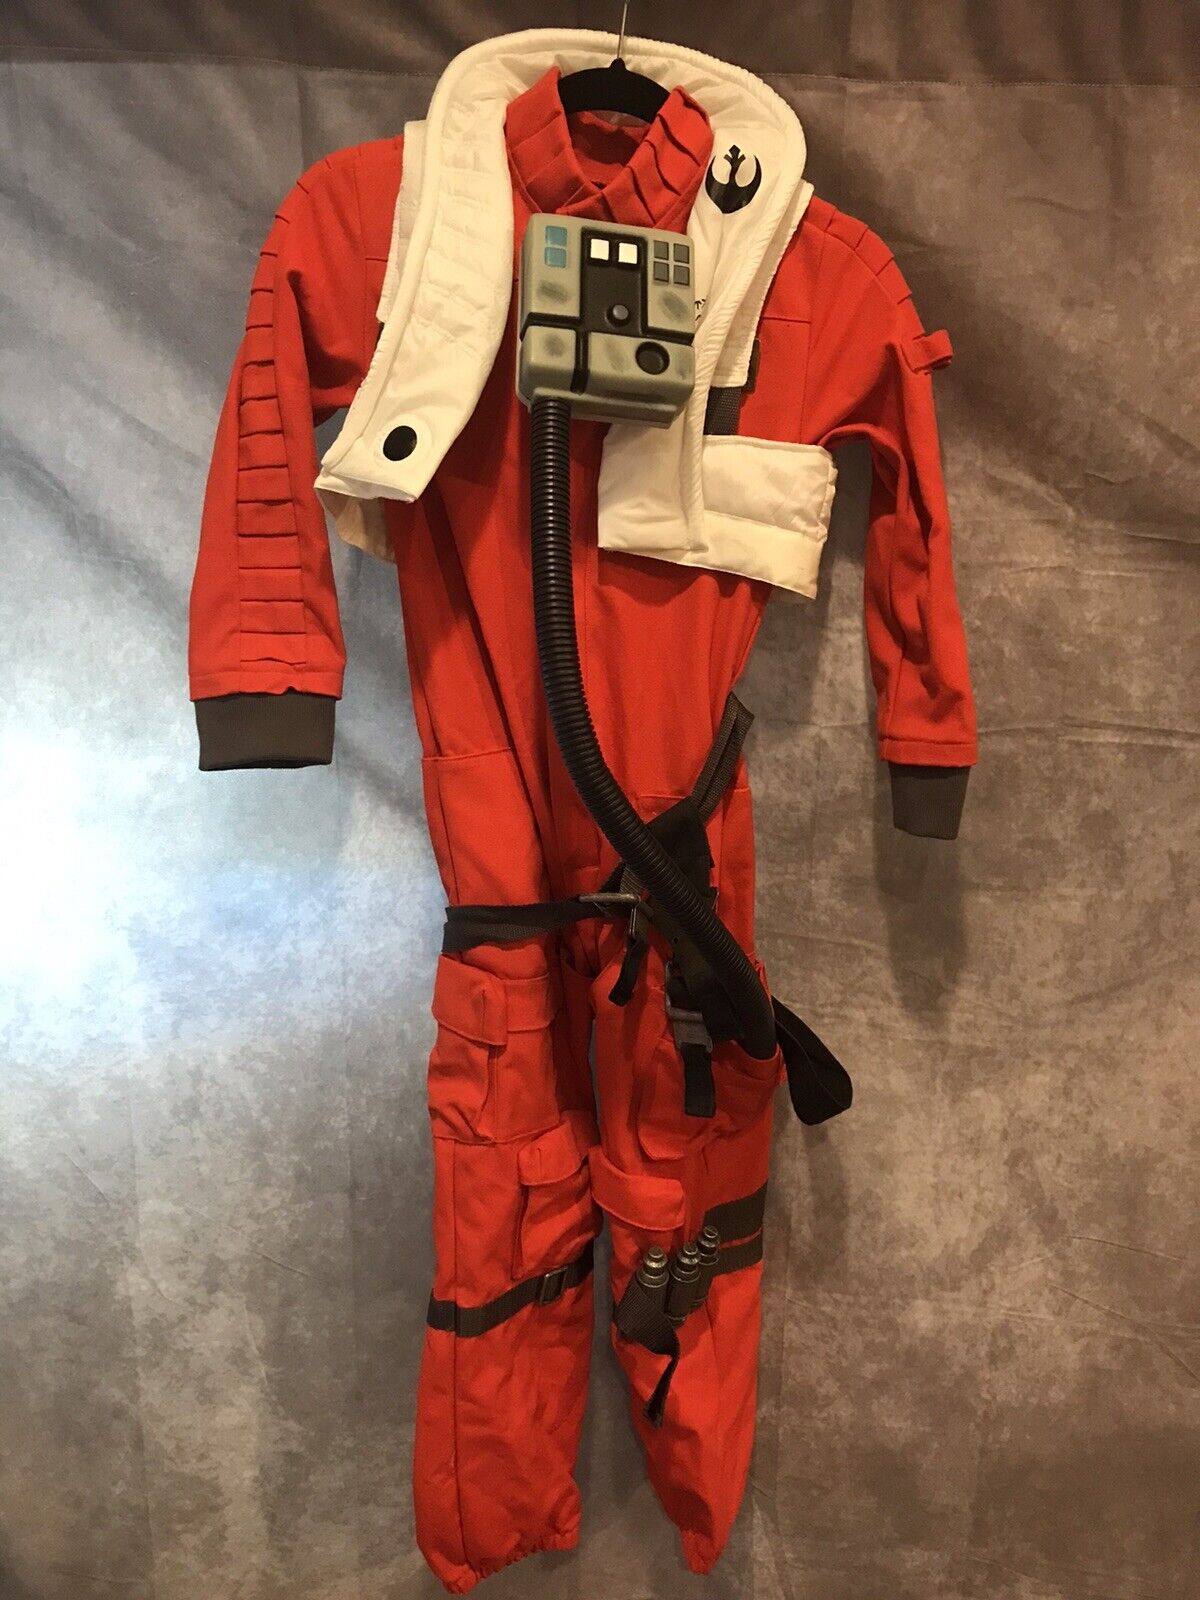 Star Wars Galaxy's Edge Rebel Pilot Costume Kids Youth Size M